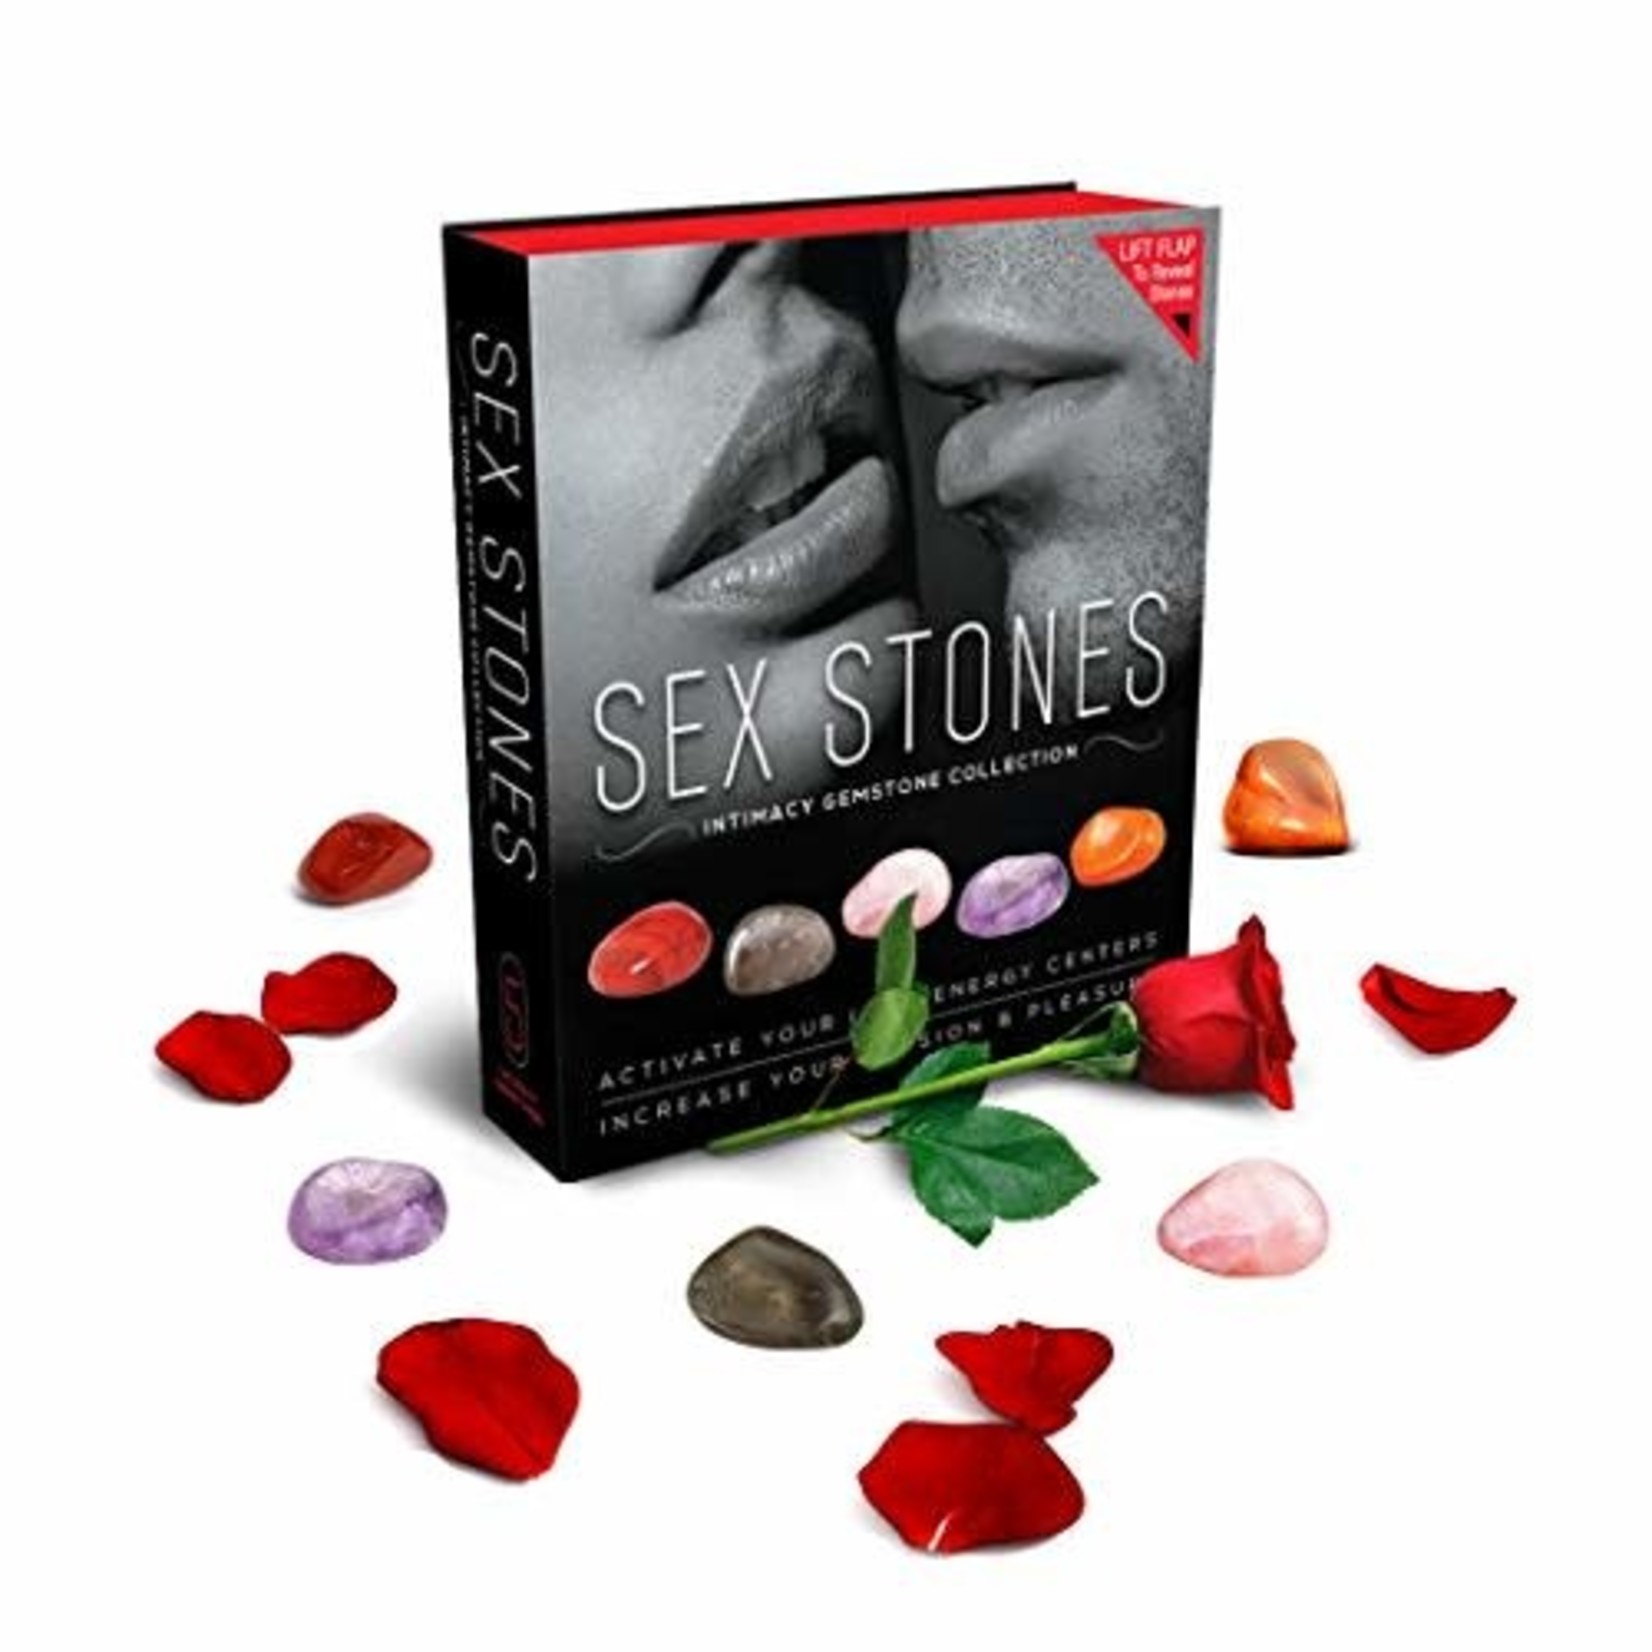 Sex Stones Intimacy Gems kit